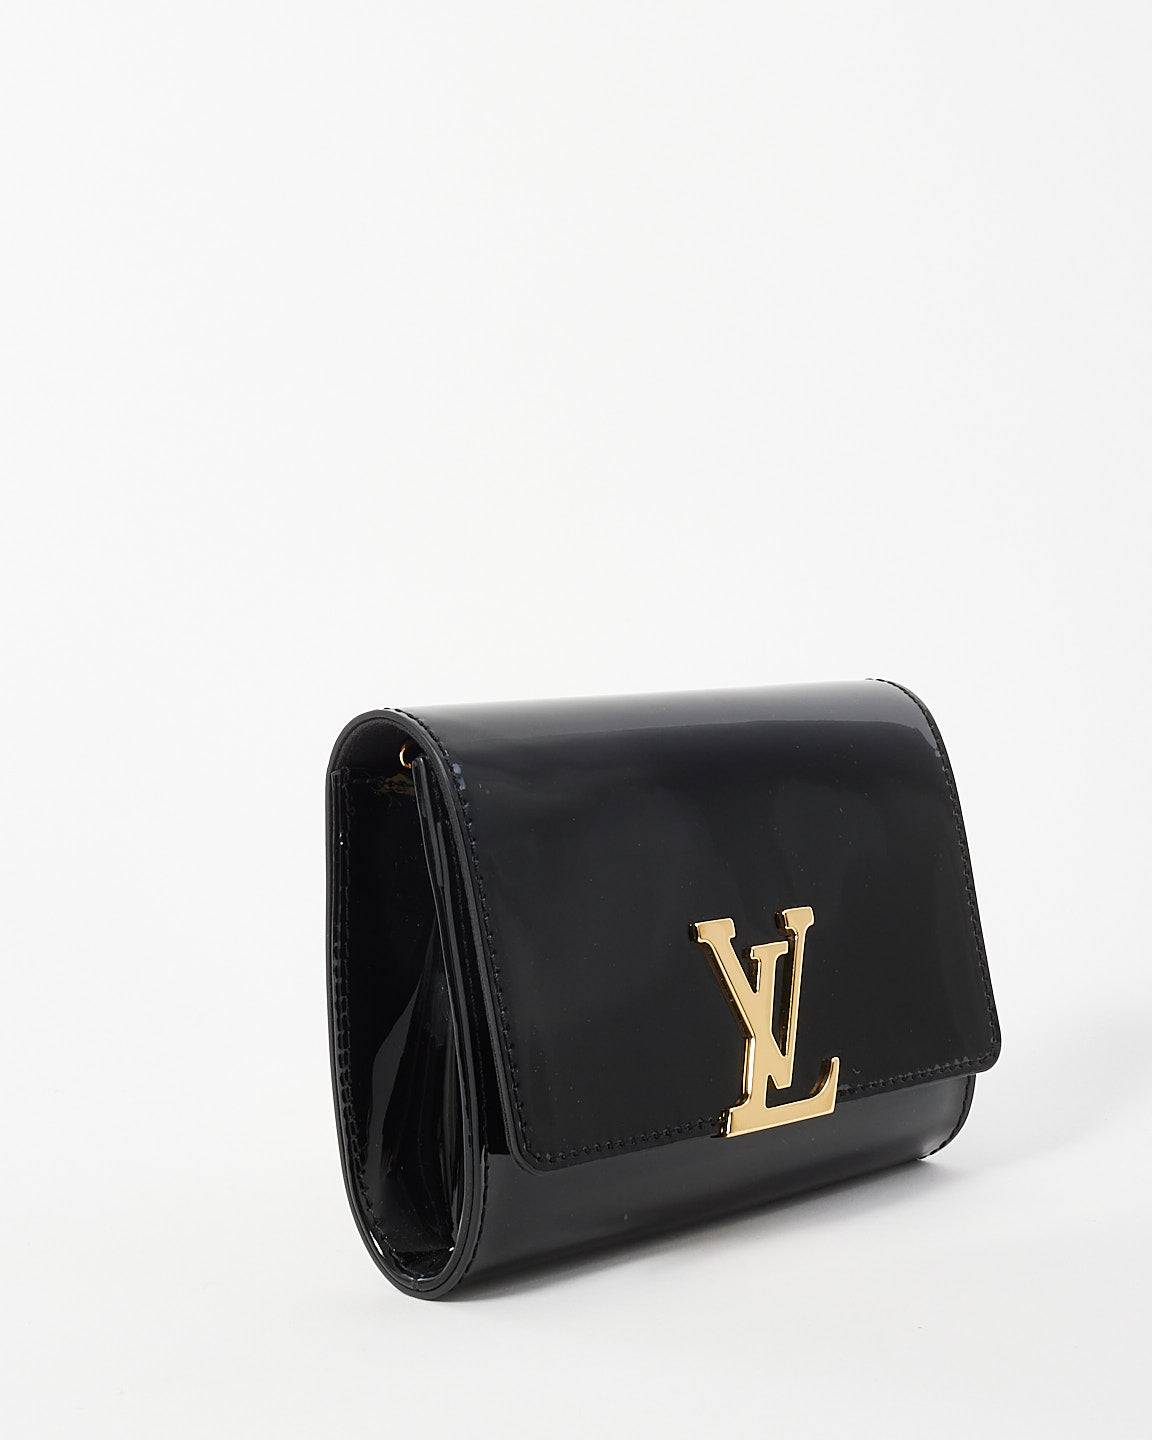 Louis Vuitton Black Patent Leather Chain Louise PM Bag